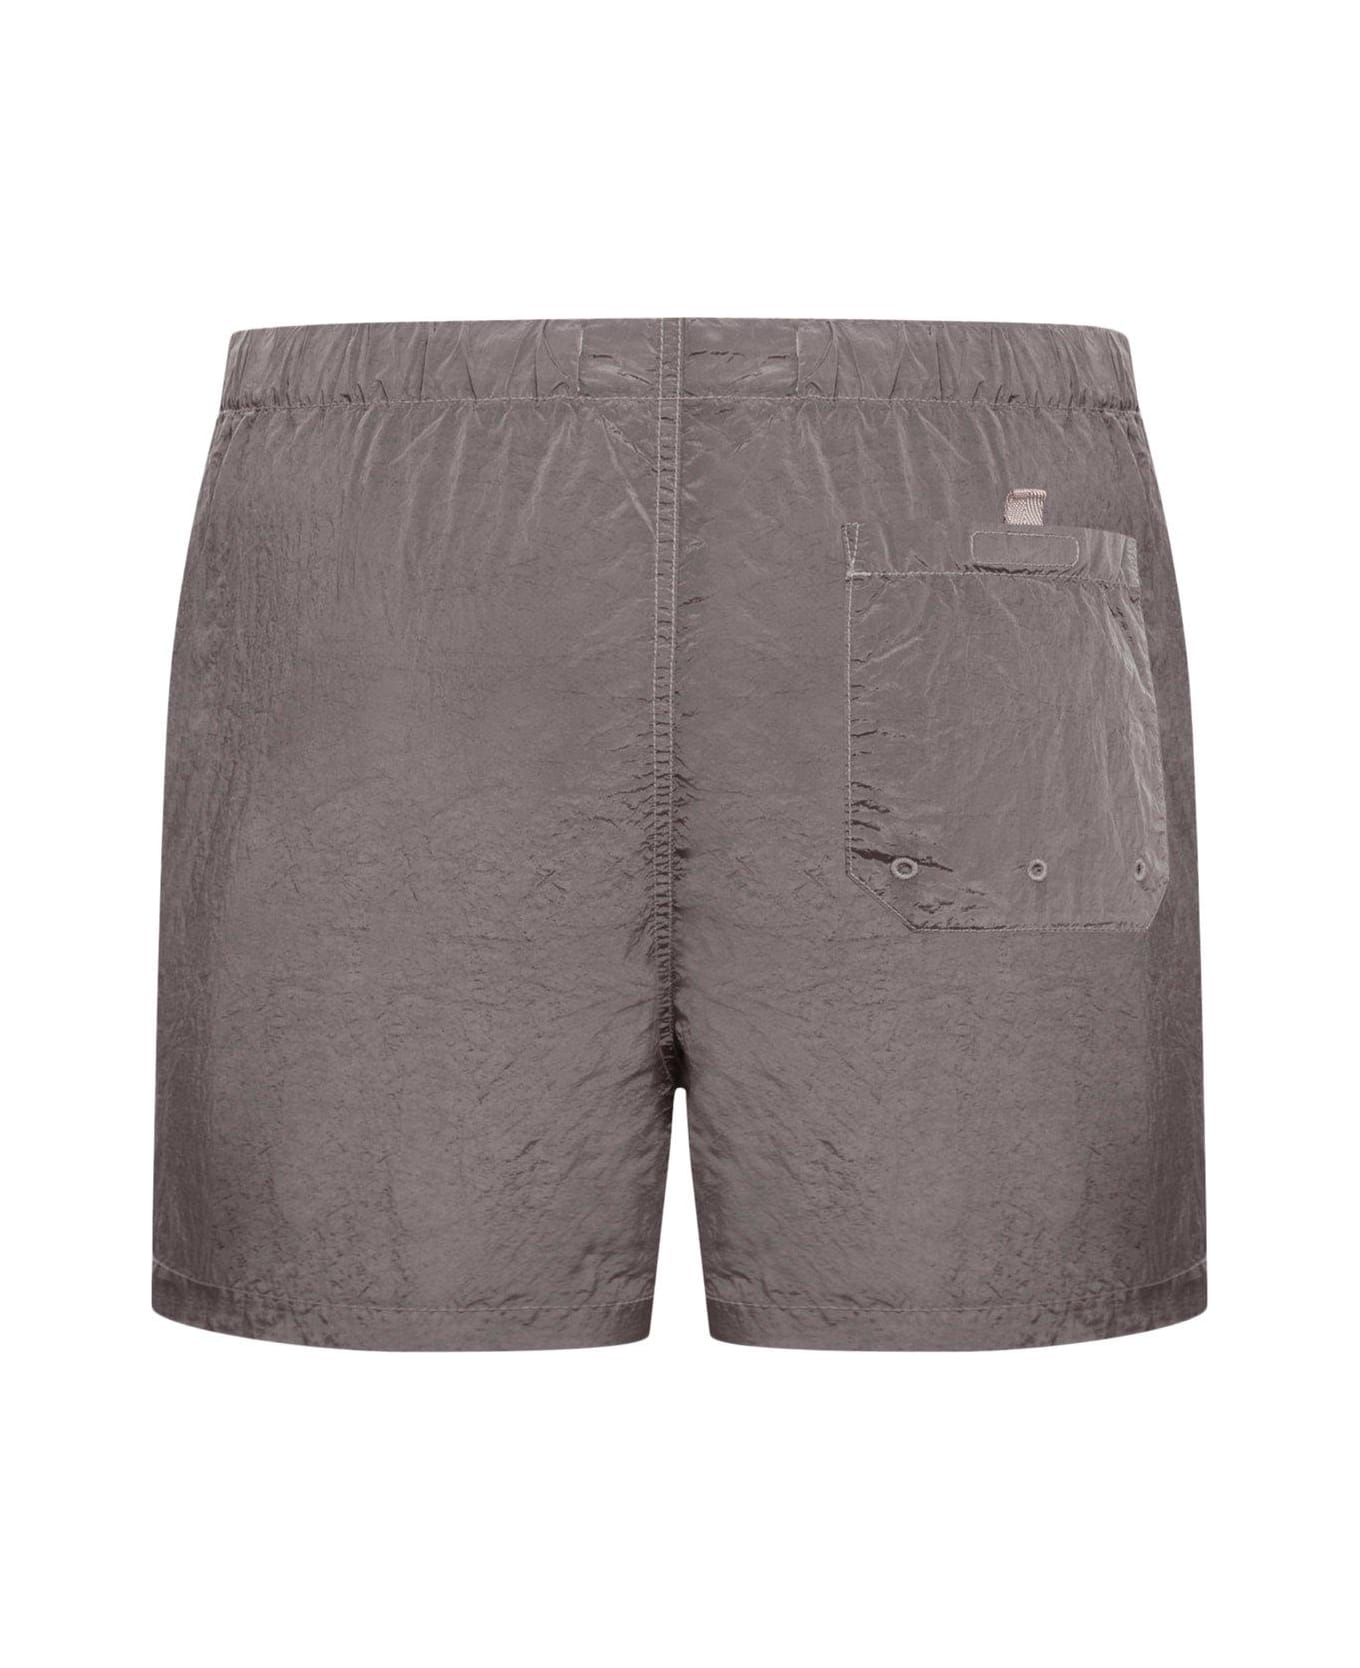 Stone Island Logo Patch Drawstring Shorts - Mud スイムトランクス